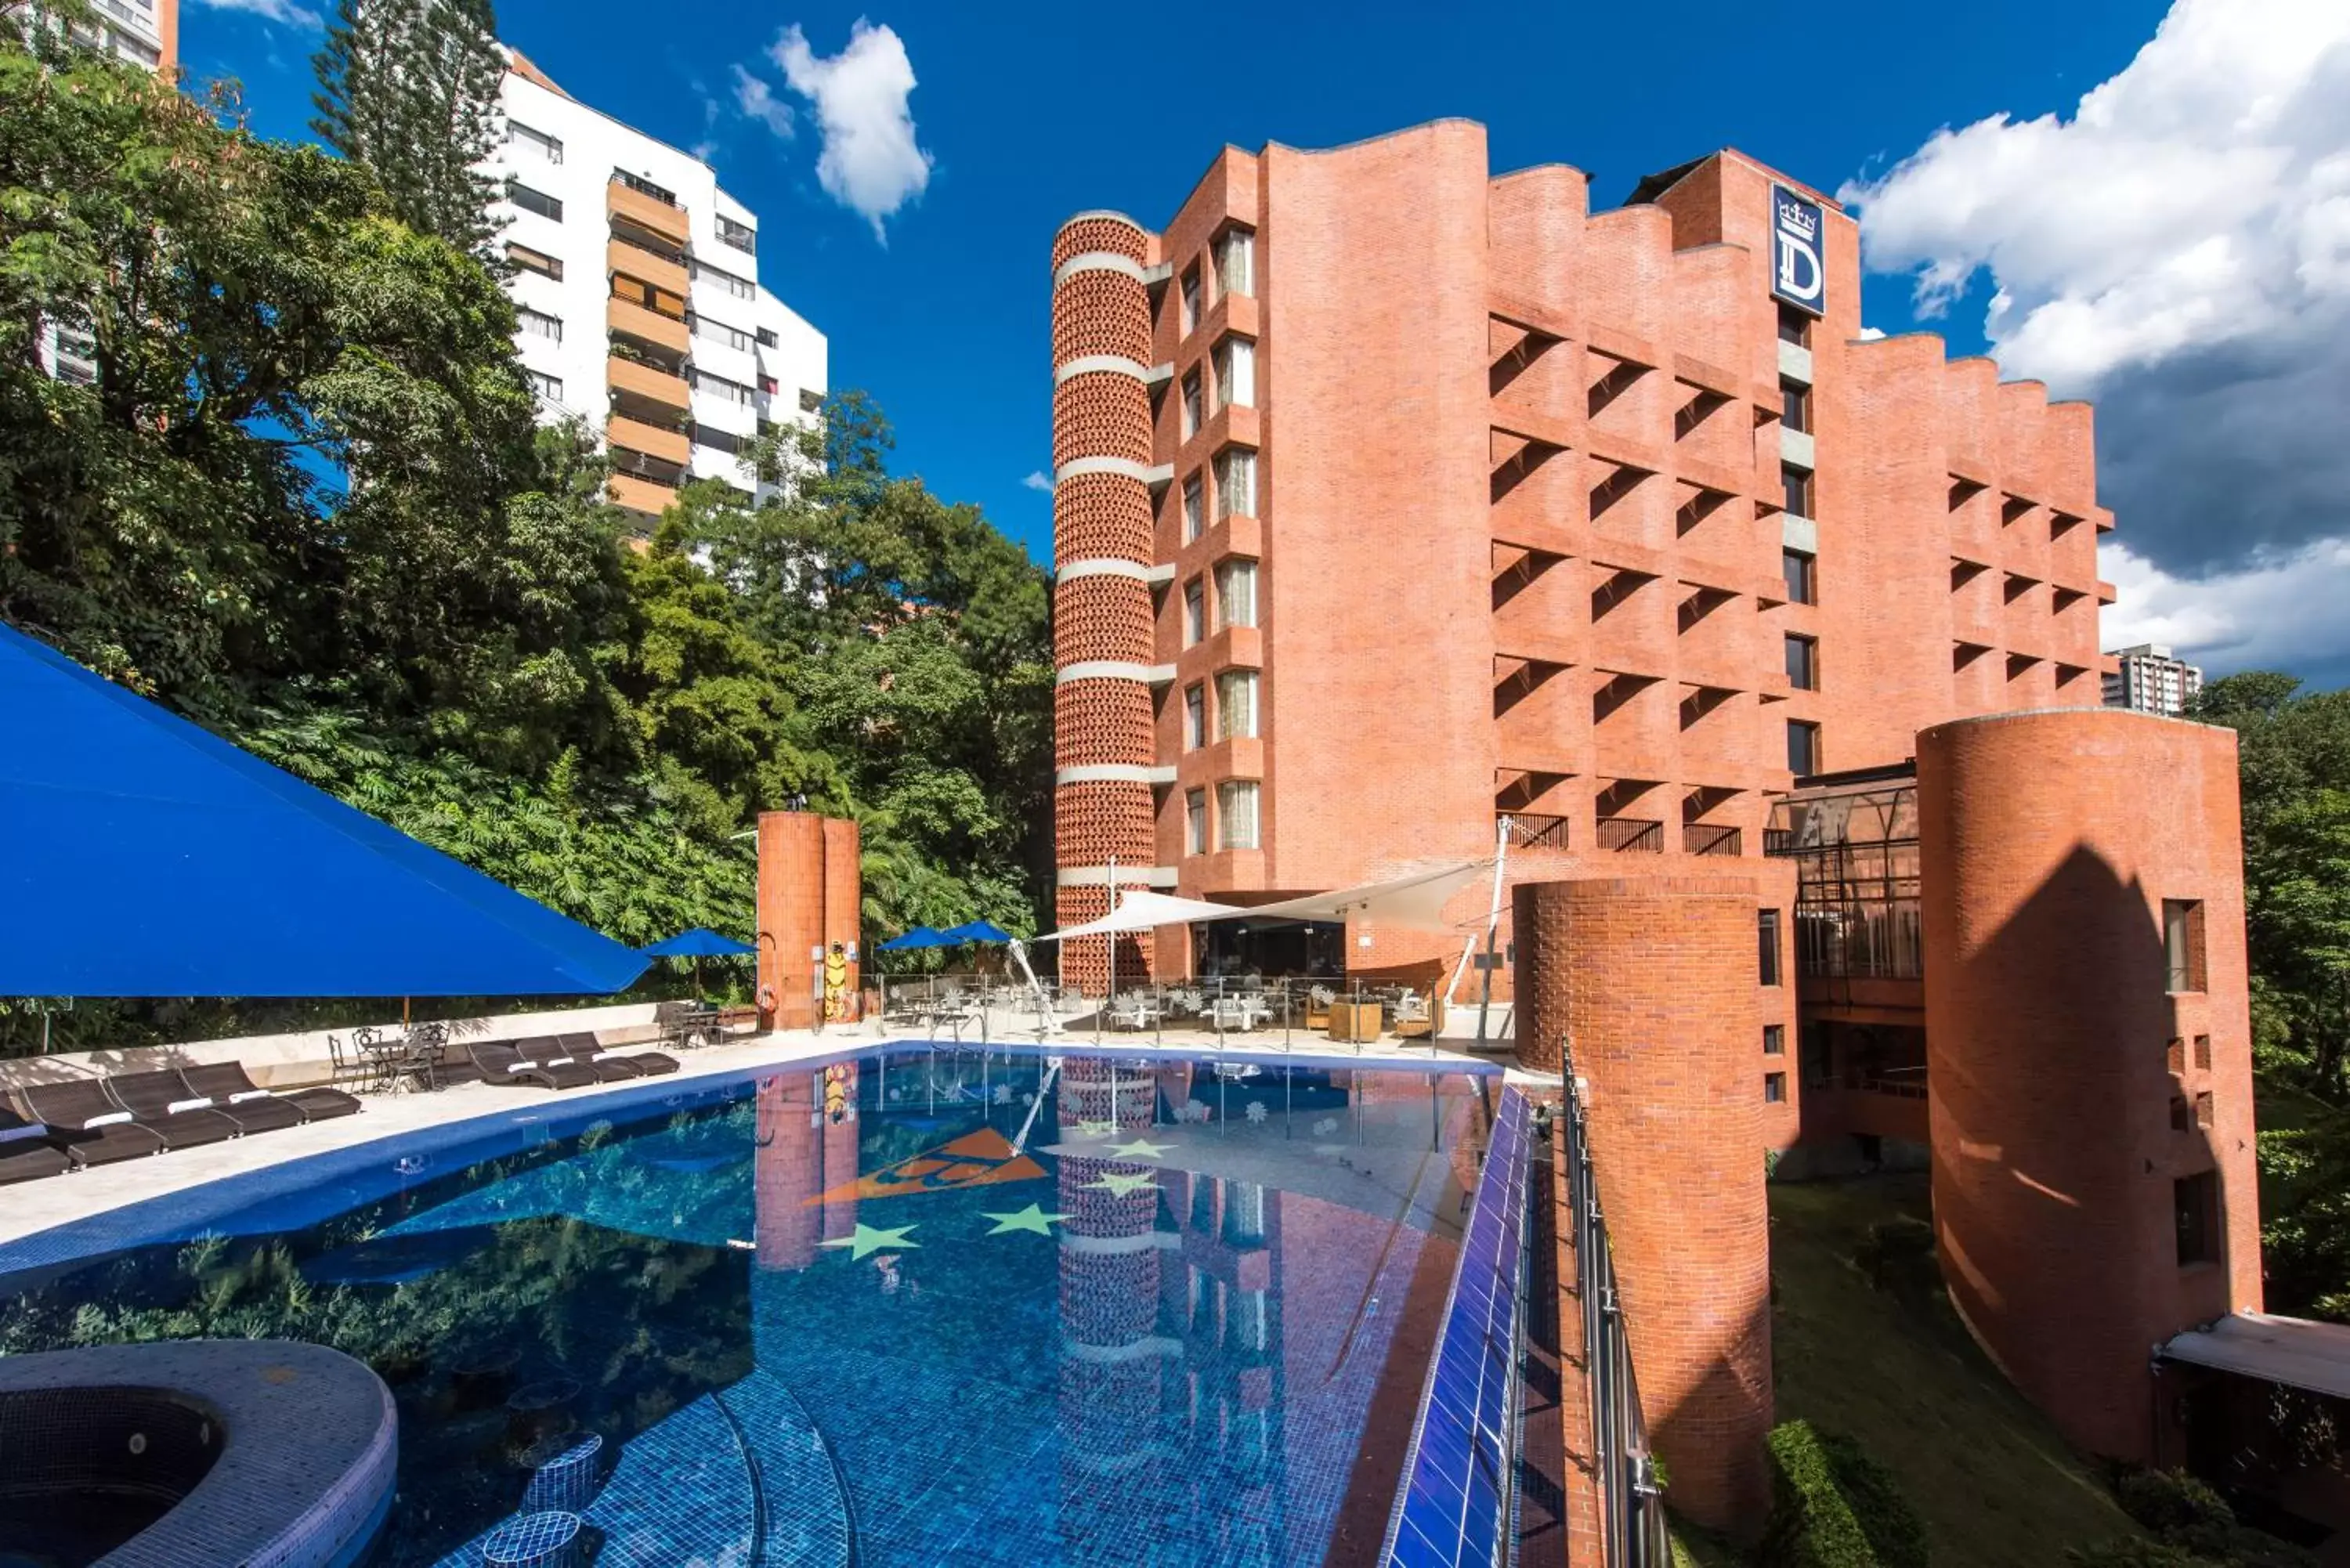 Swimming Pool in Hotel Dann Carlton Belfort Medellin